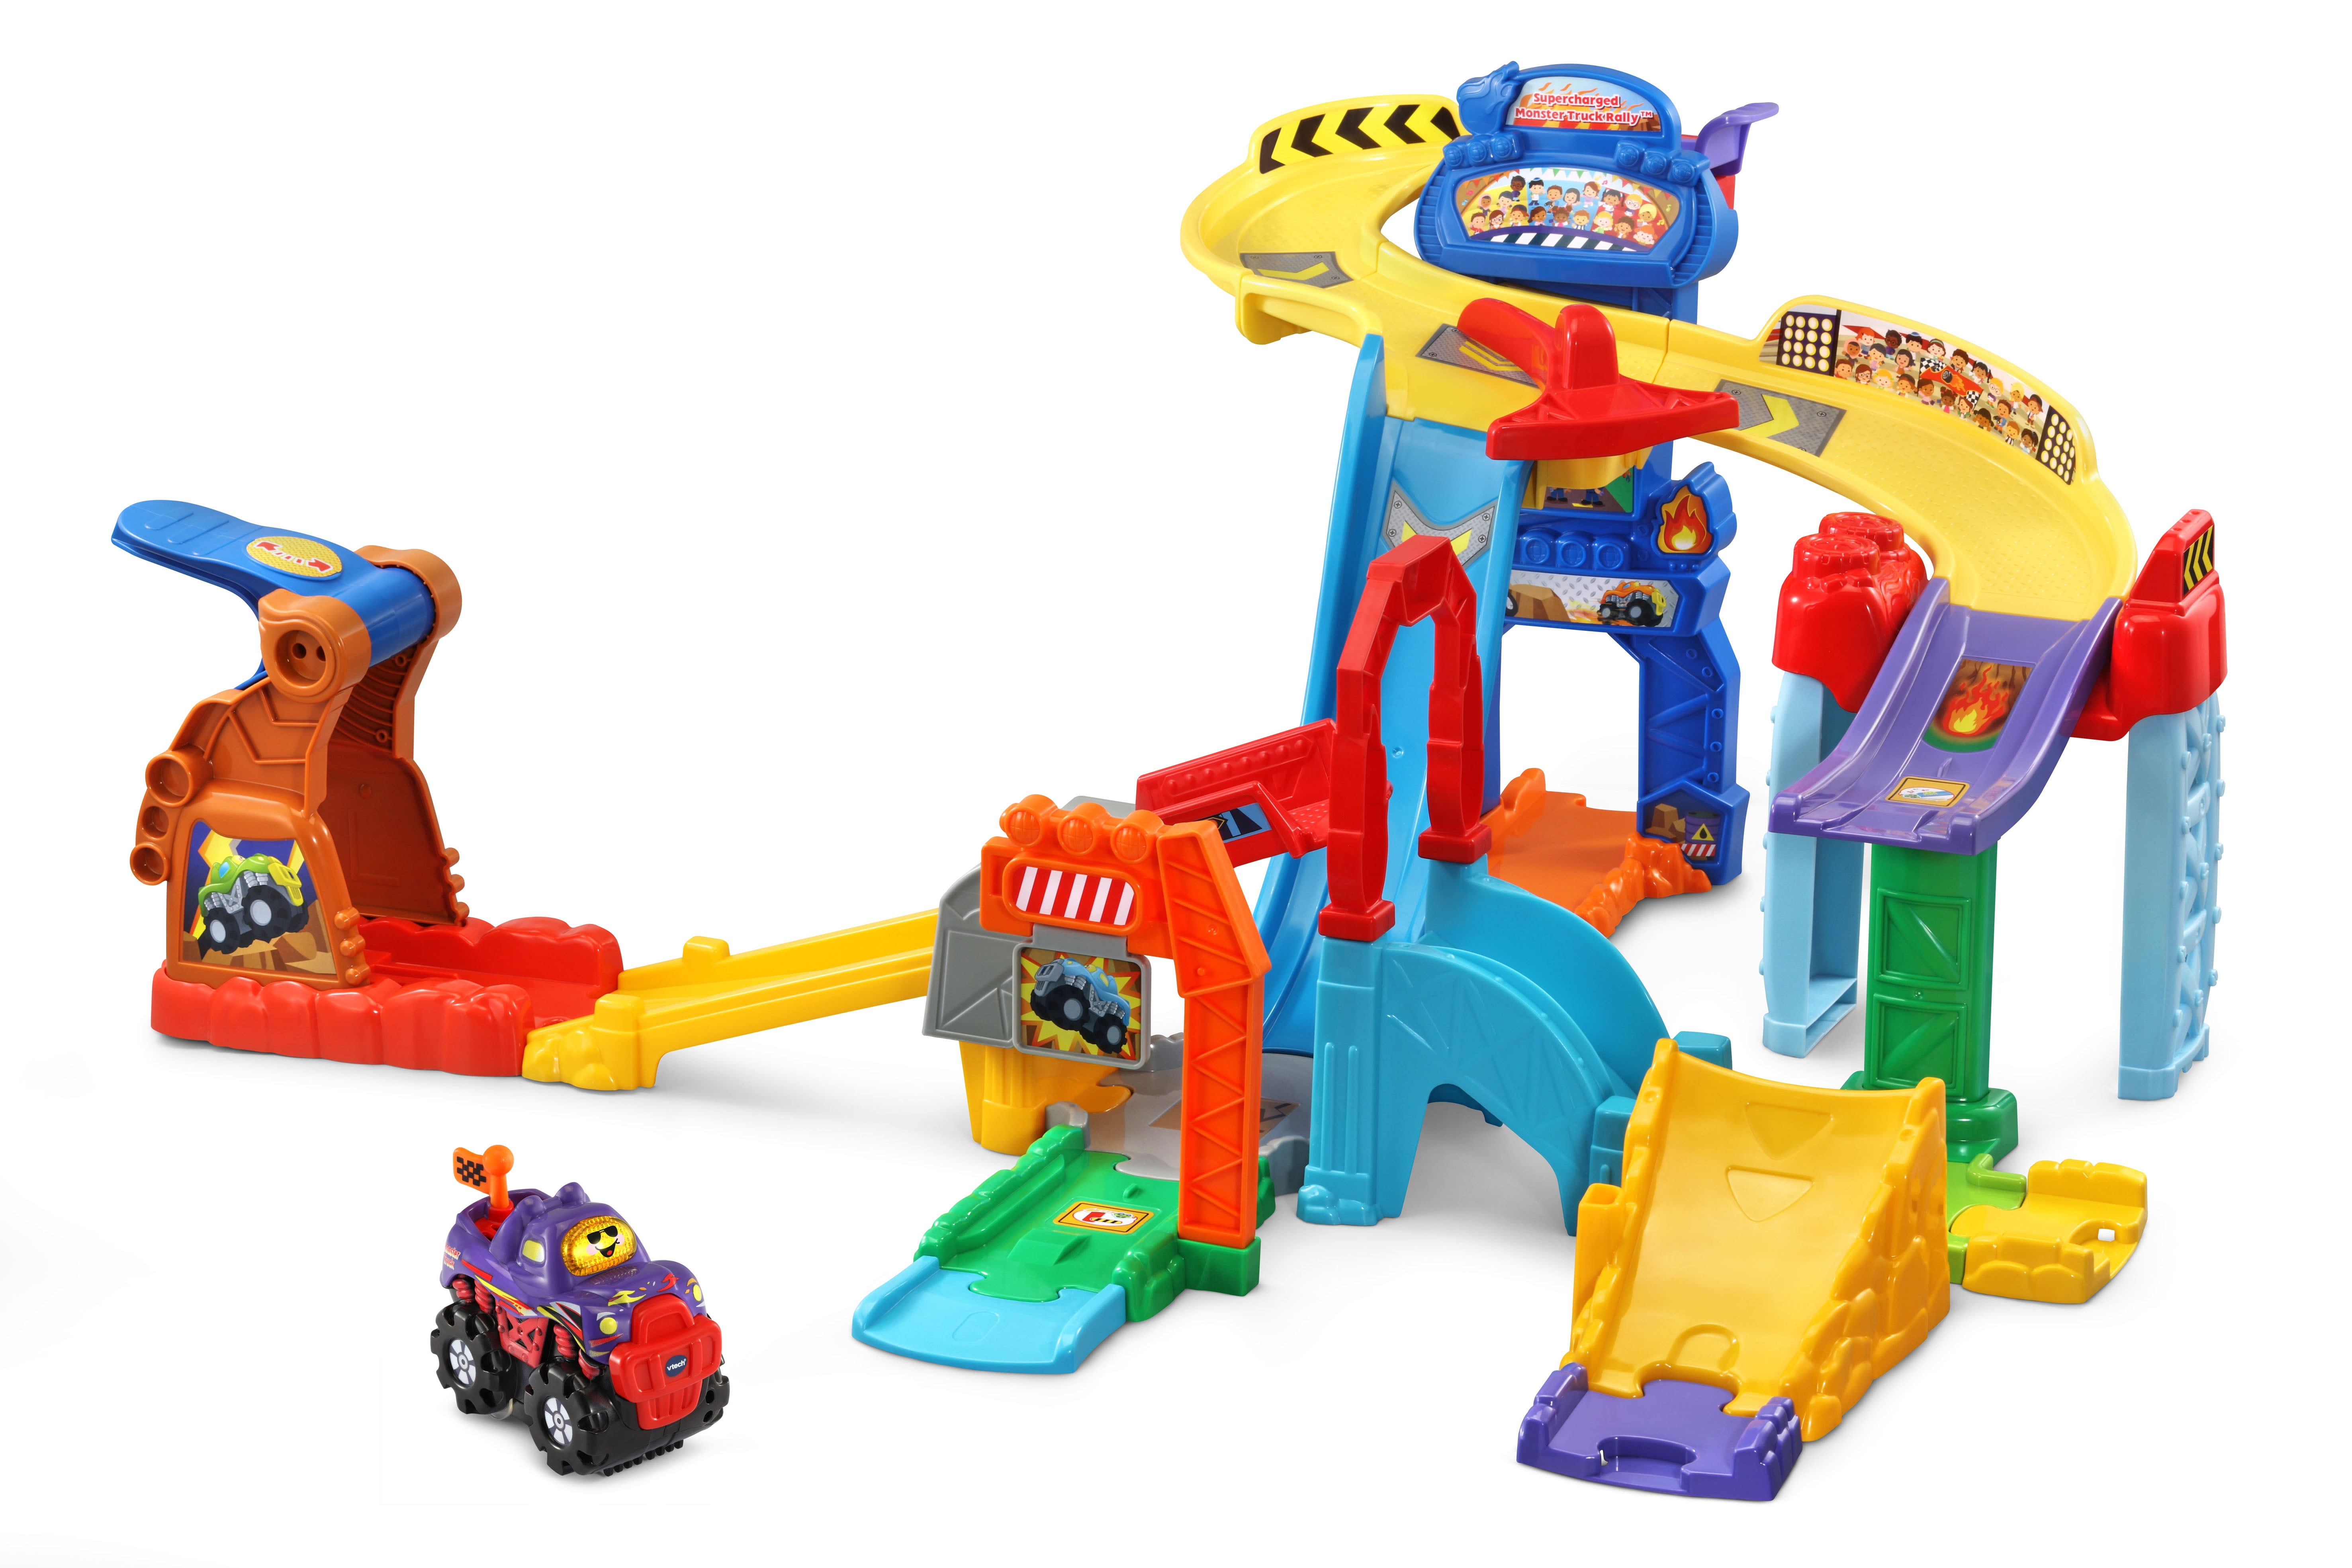 VTech Go Smart Wheels Race & Play Adventure Park Other Preschool Pretend Toys for sale online 